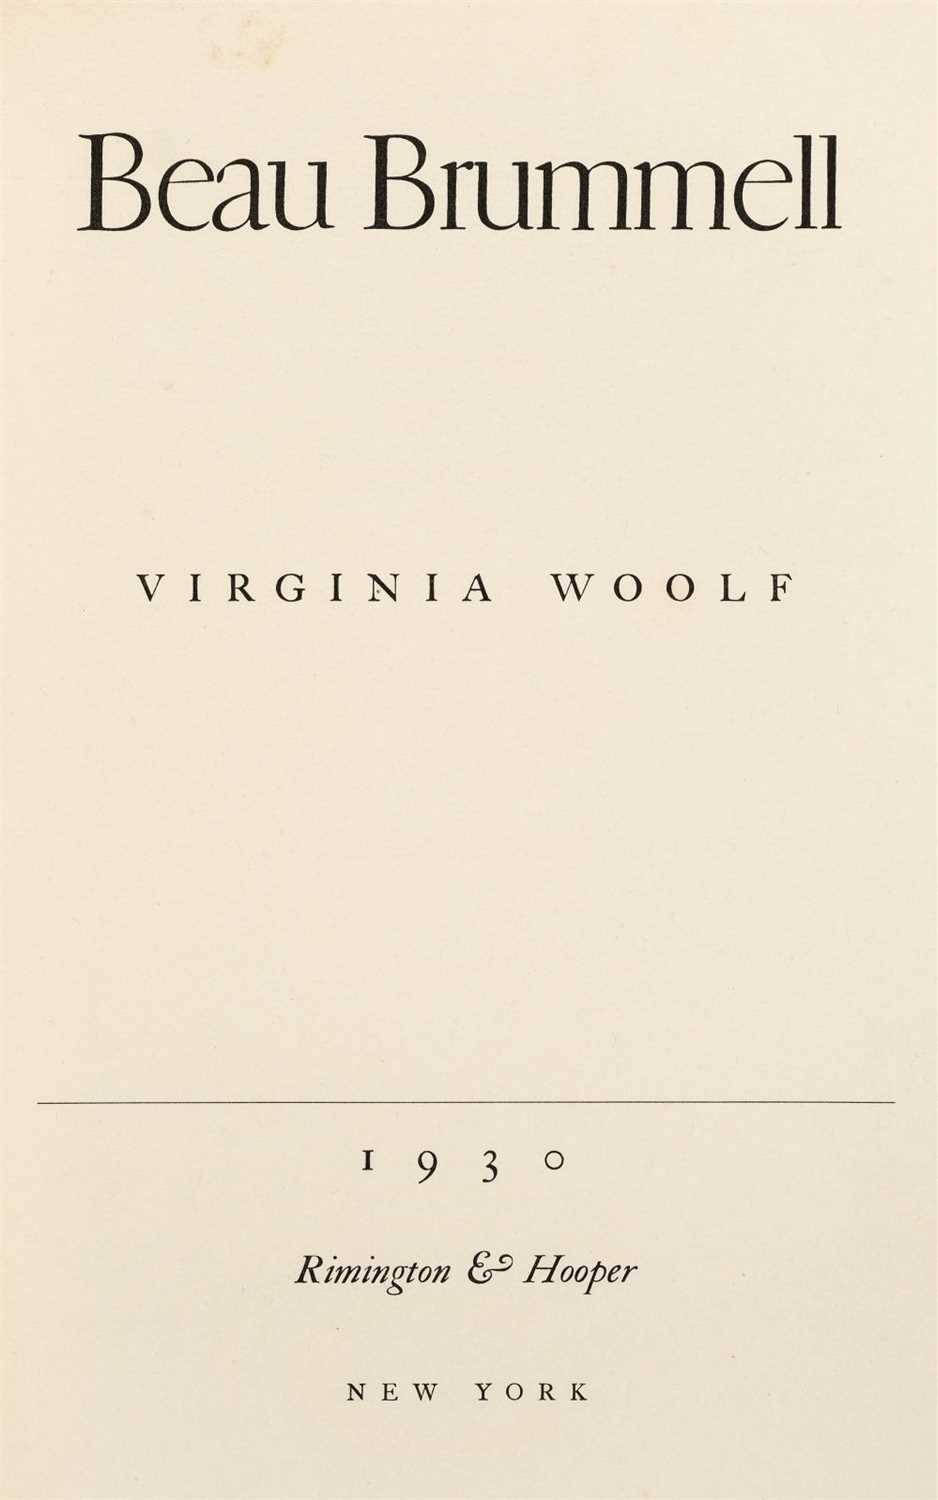 Lot 769 - Woolf (Virginia). Beau Brummell, 1st separate edition, New York: Rimington & Hooper, 1930